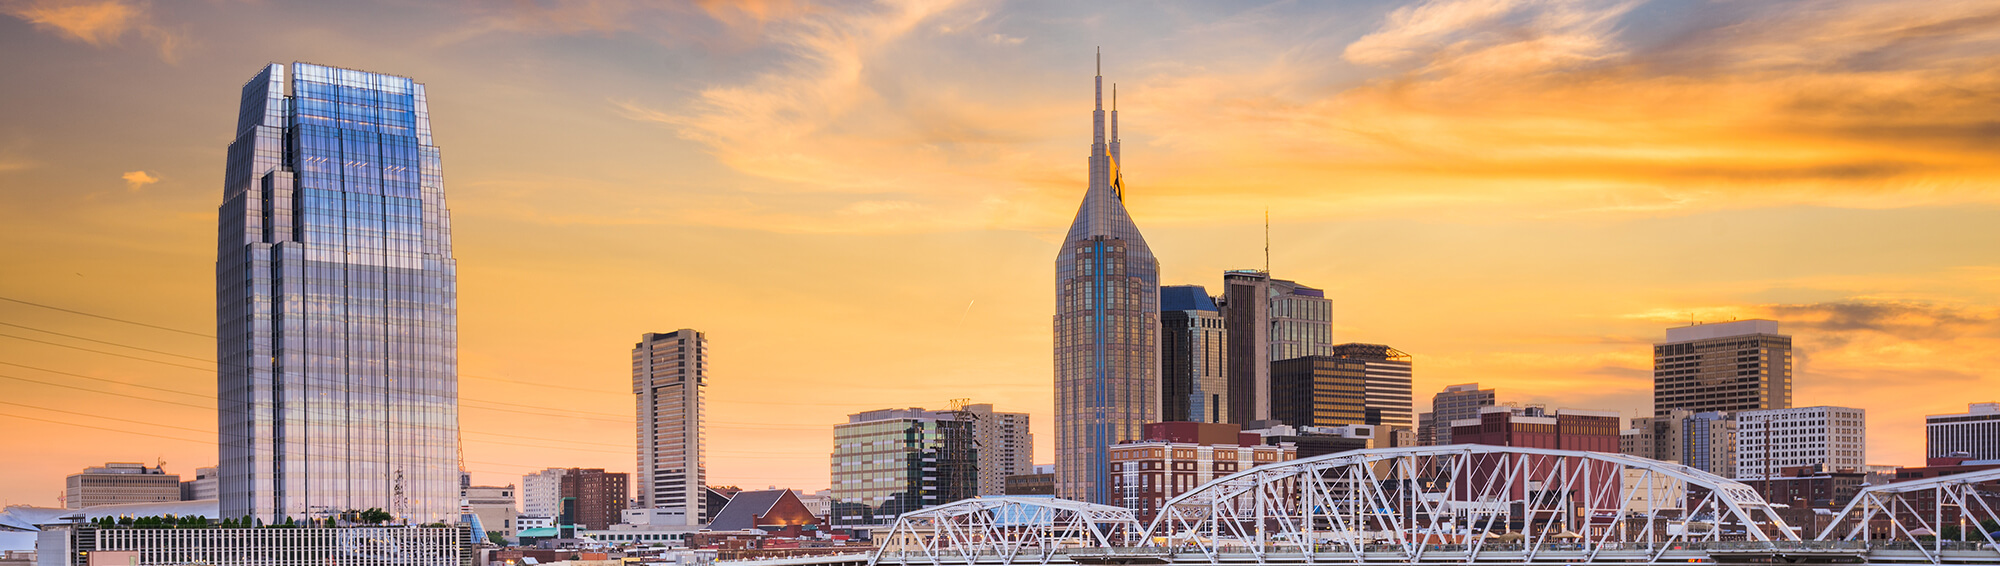 Nashville to Host the 2014 Tennessee Bike Summit